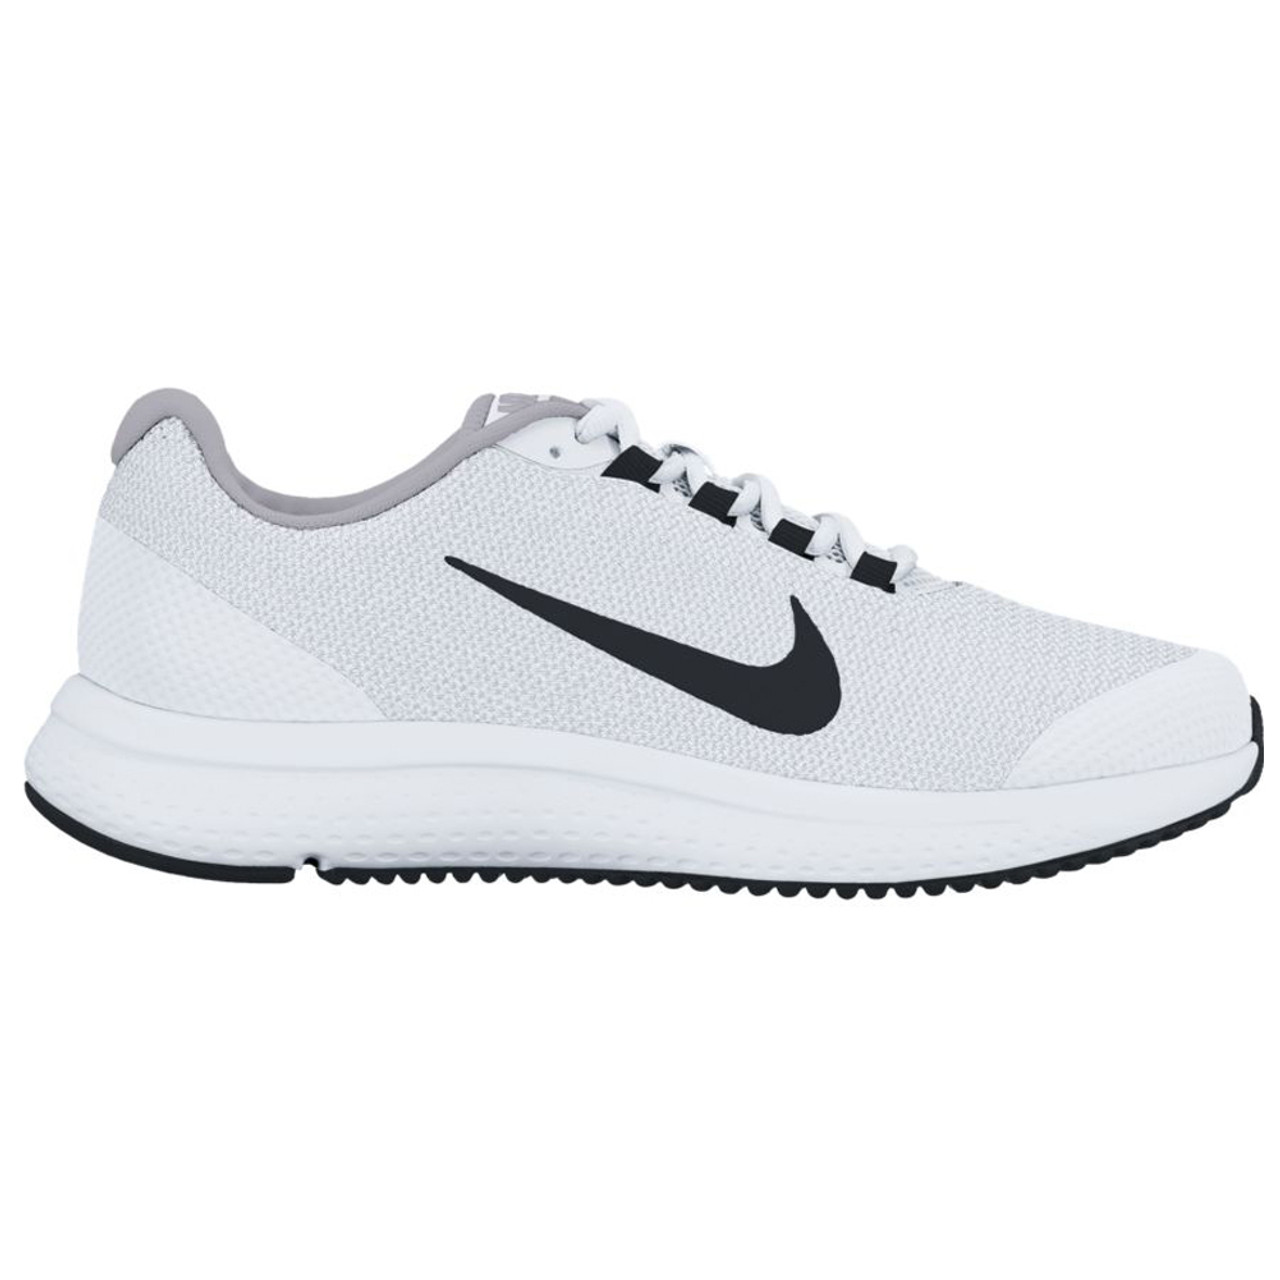 Nike Men's Runallday Shoe - White | Discount Nike Men's Athletic & More Shoolu.com | Shoolu.com